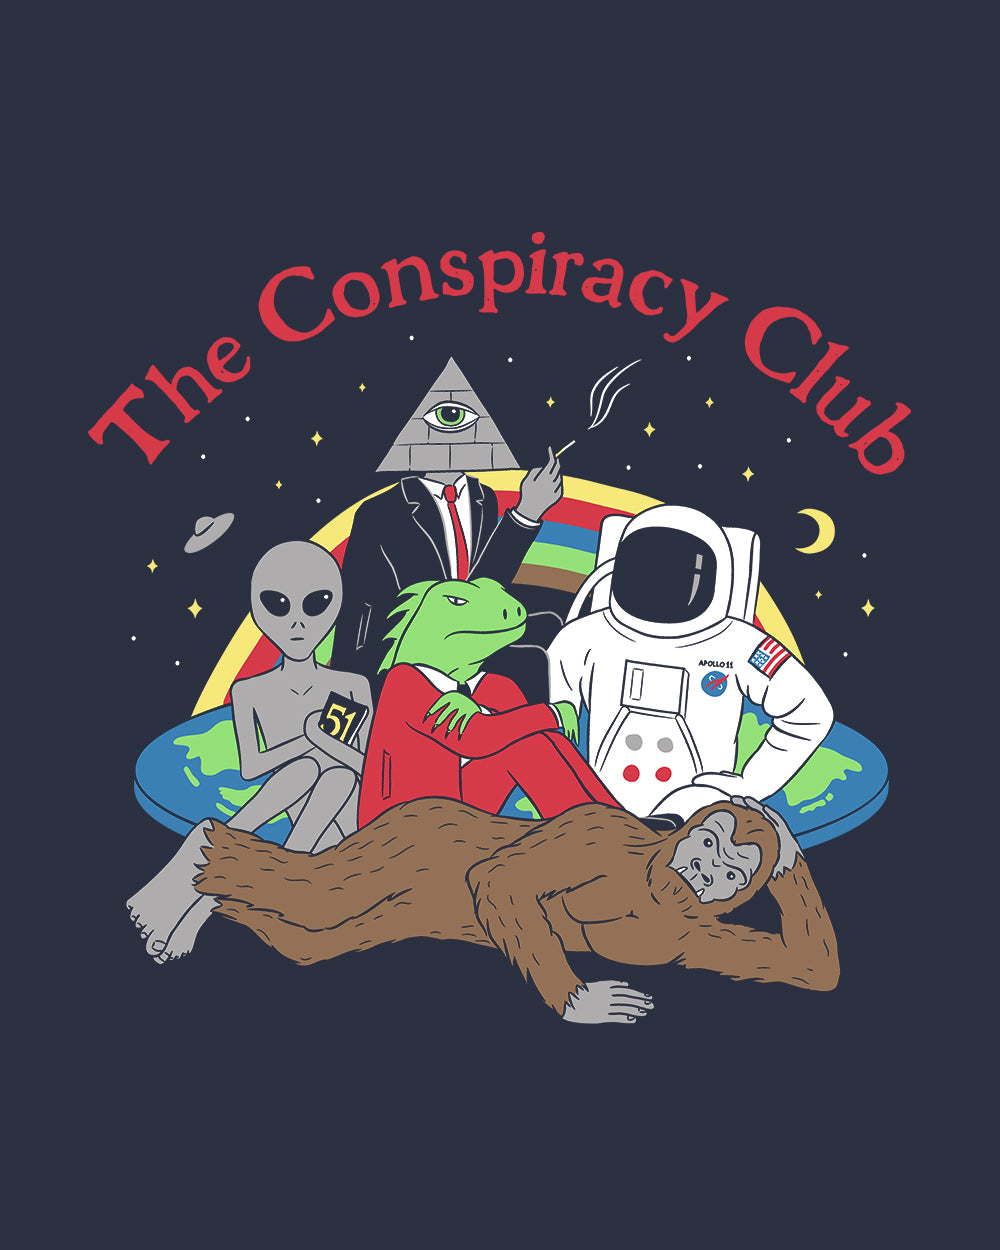 The Conspiracy Club Kids T-Shirt Australia Online #colour_navy